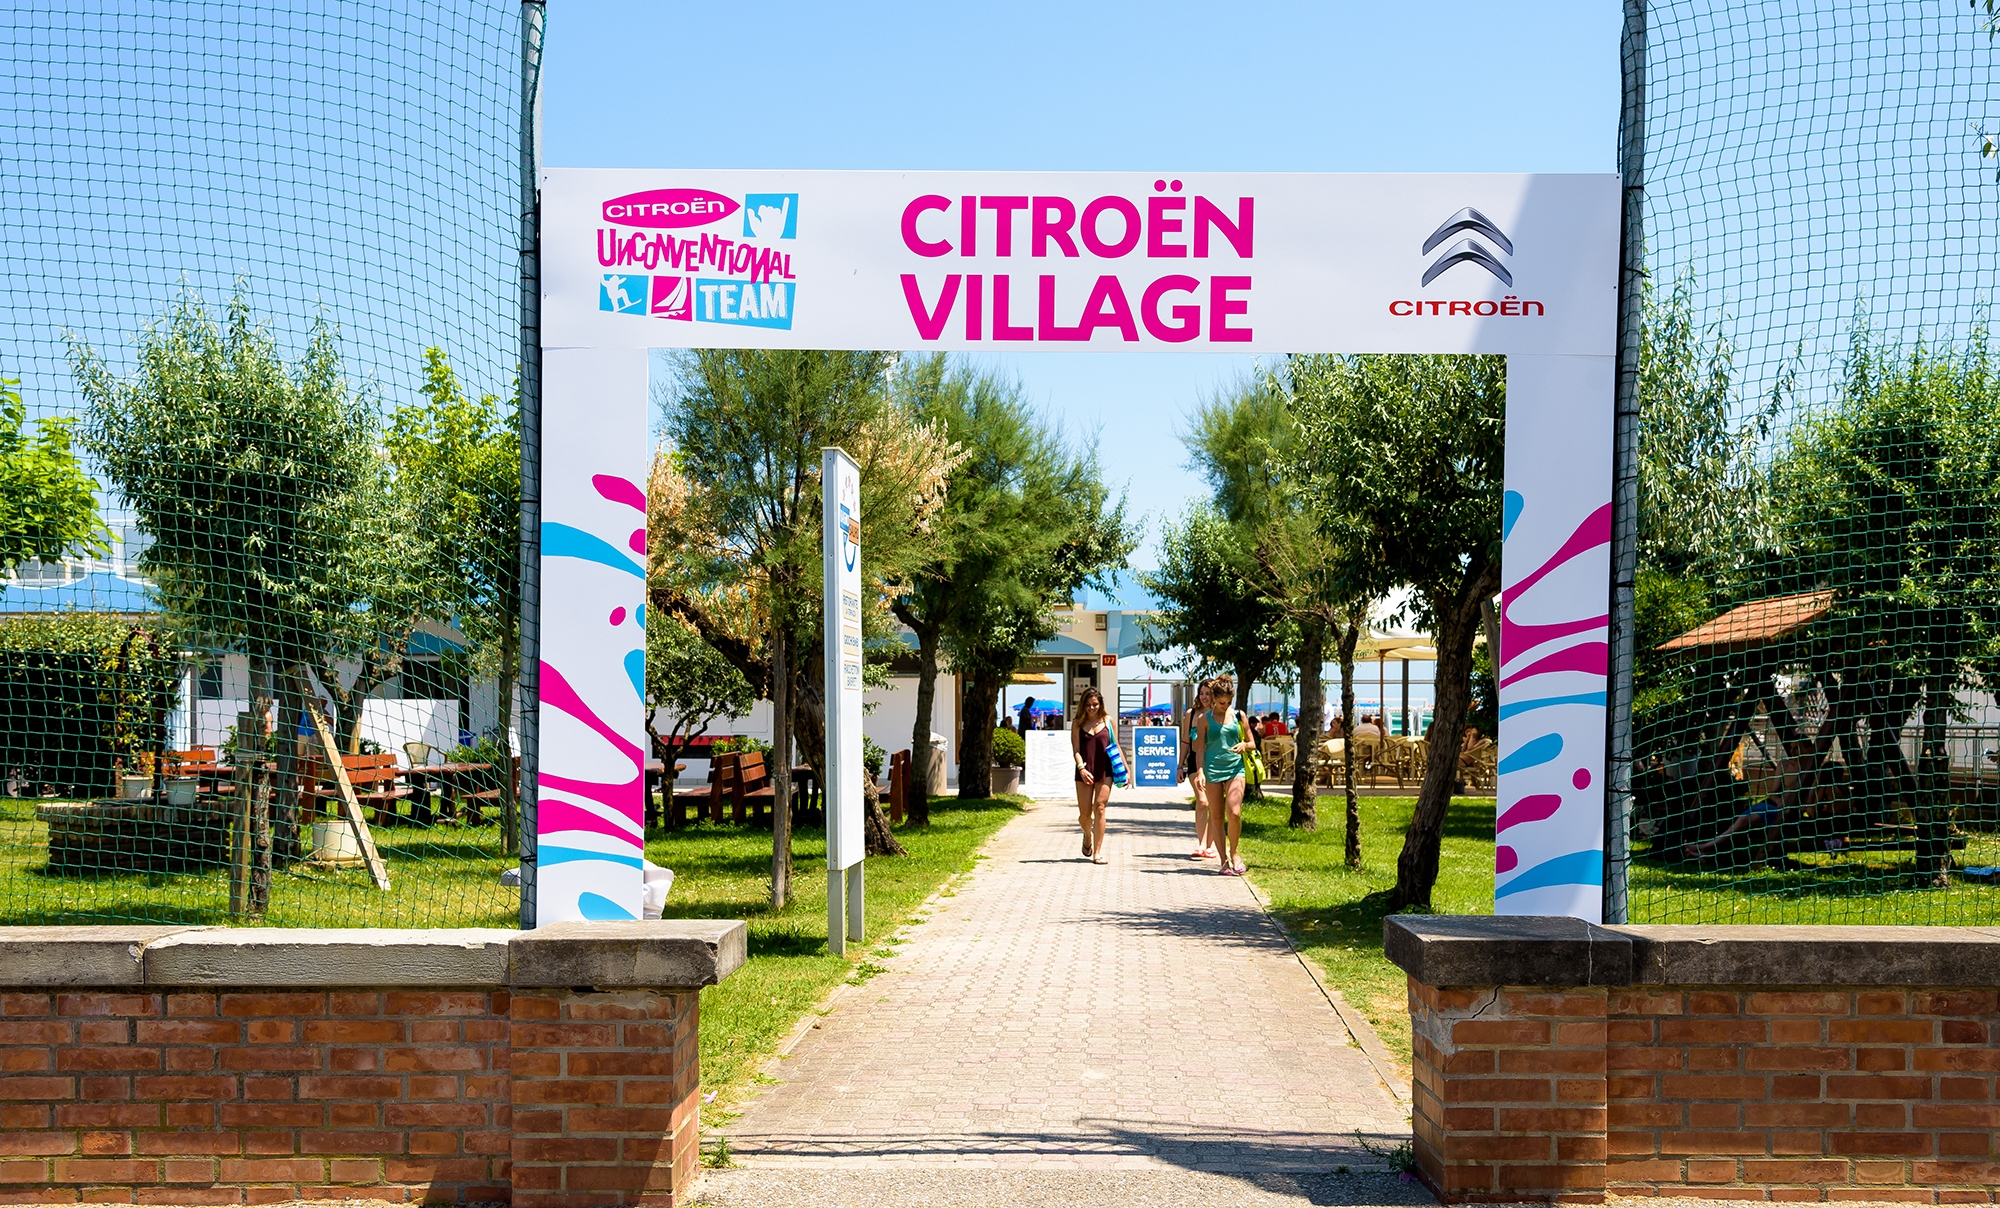 Apre i battenti Citroën Village per l’estate 2016